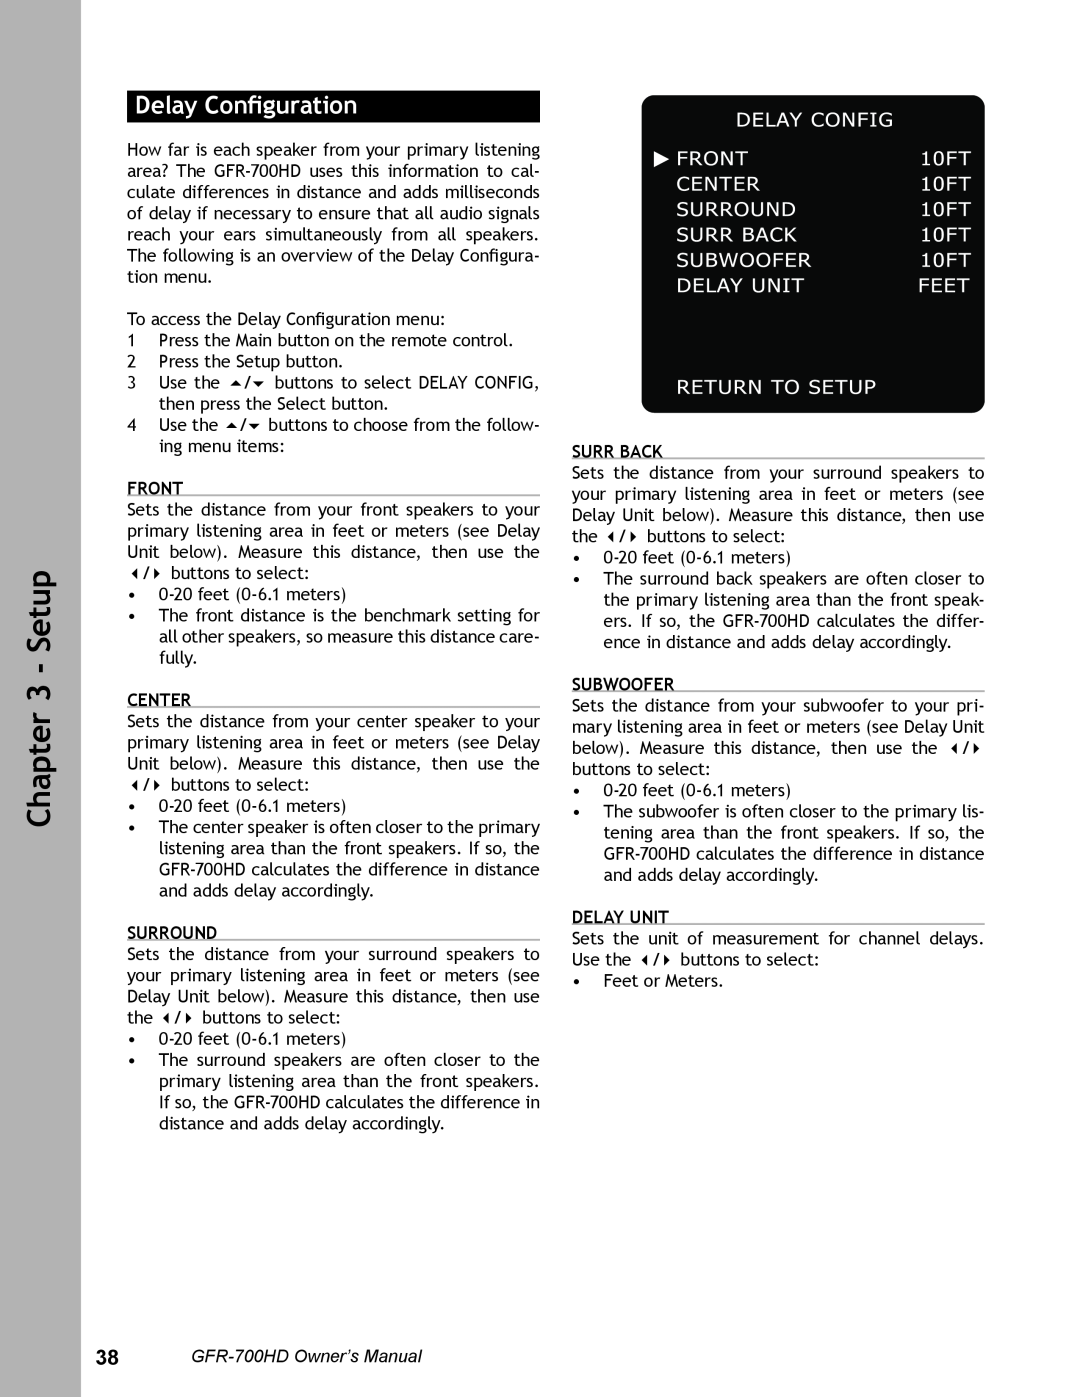 Adcom GFR-700HD user manual Delay Conﬁguration, Delay Unit, Setup, Front, Center, Surround, Surr Back, Subwoofer 